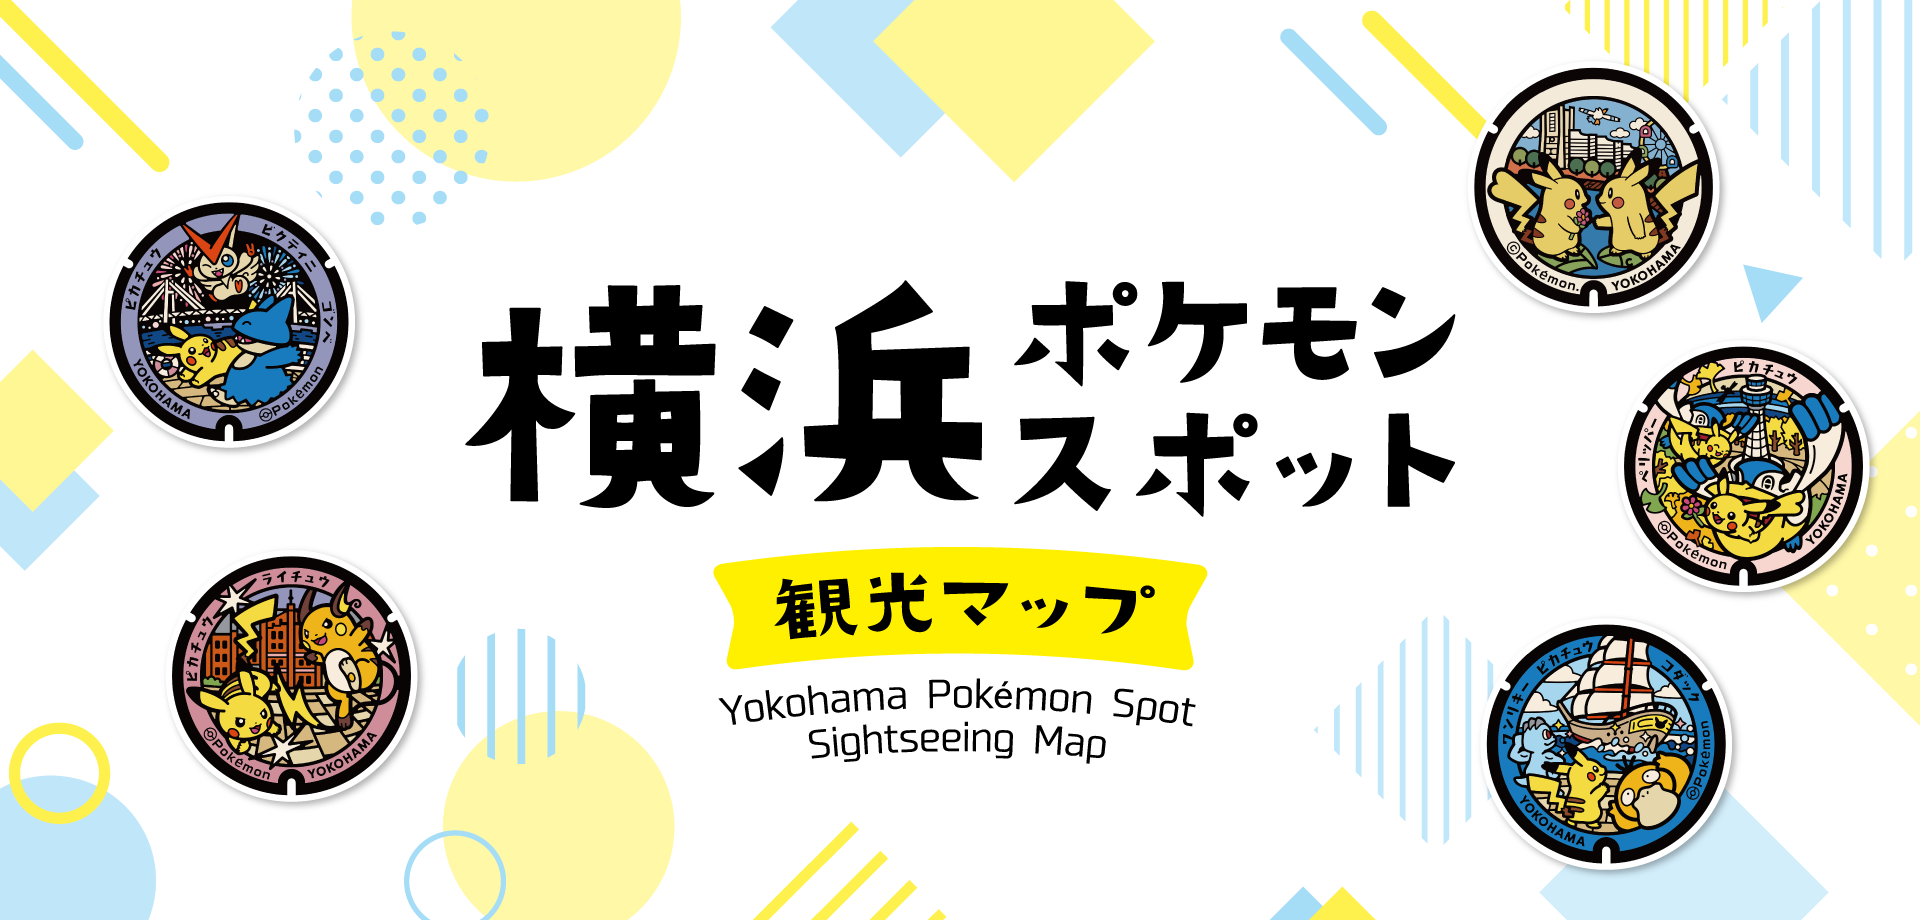 Peta Wisata Spot Pokémon Yokohama